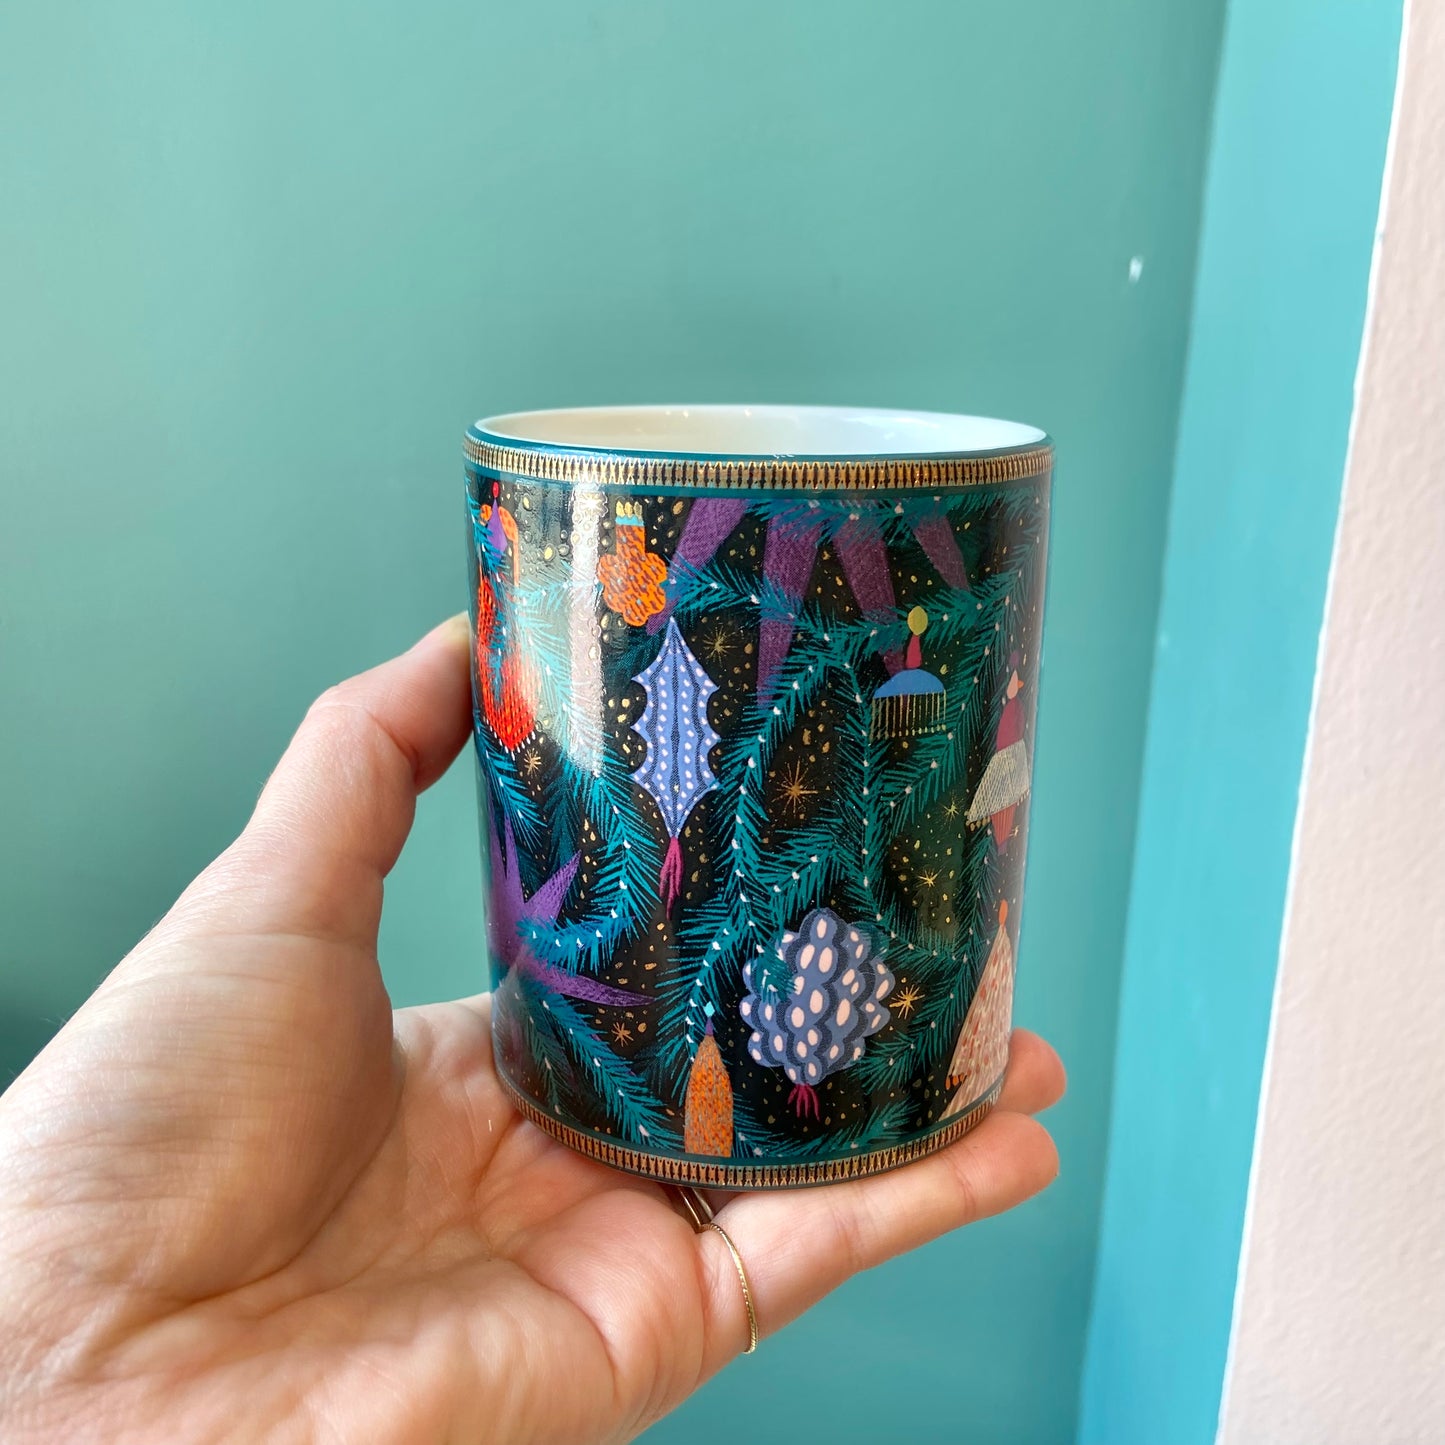 Enchanted Forest Ceramic Jar Candle